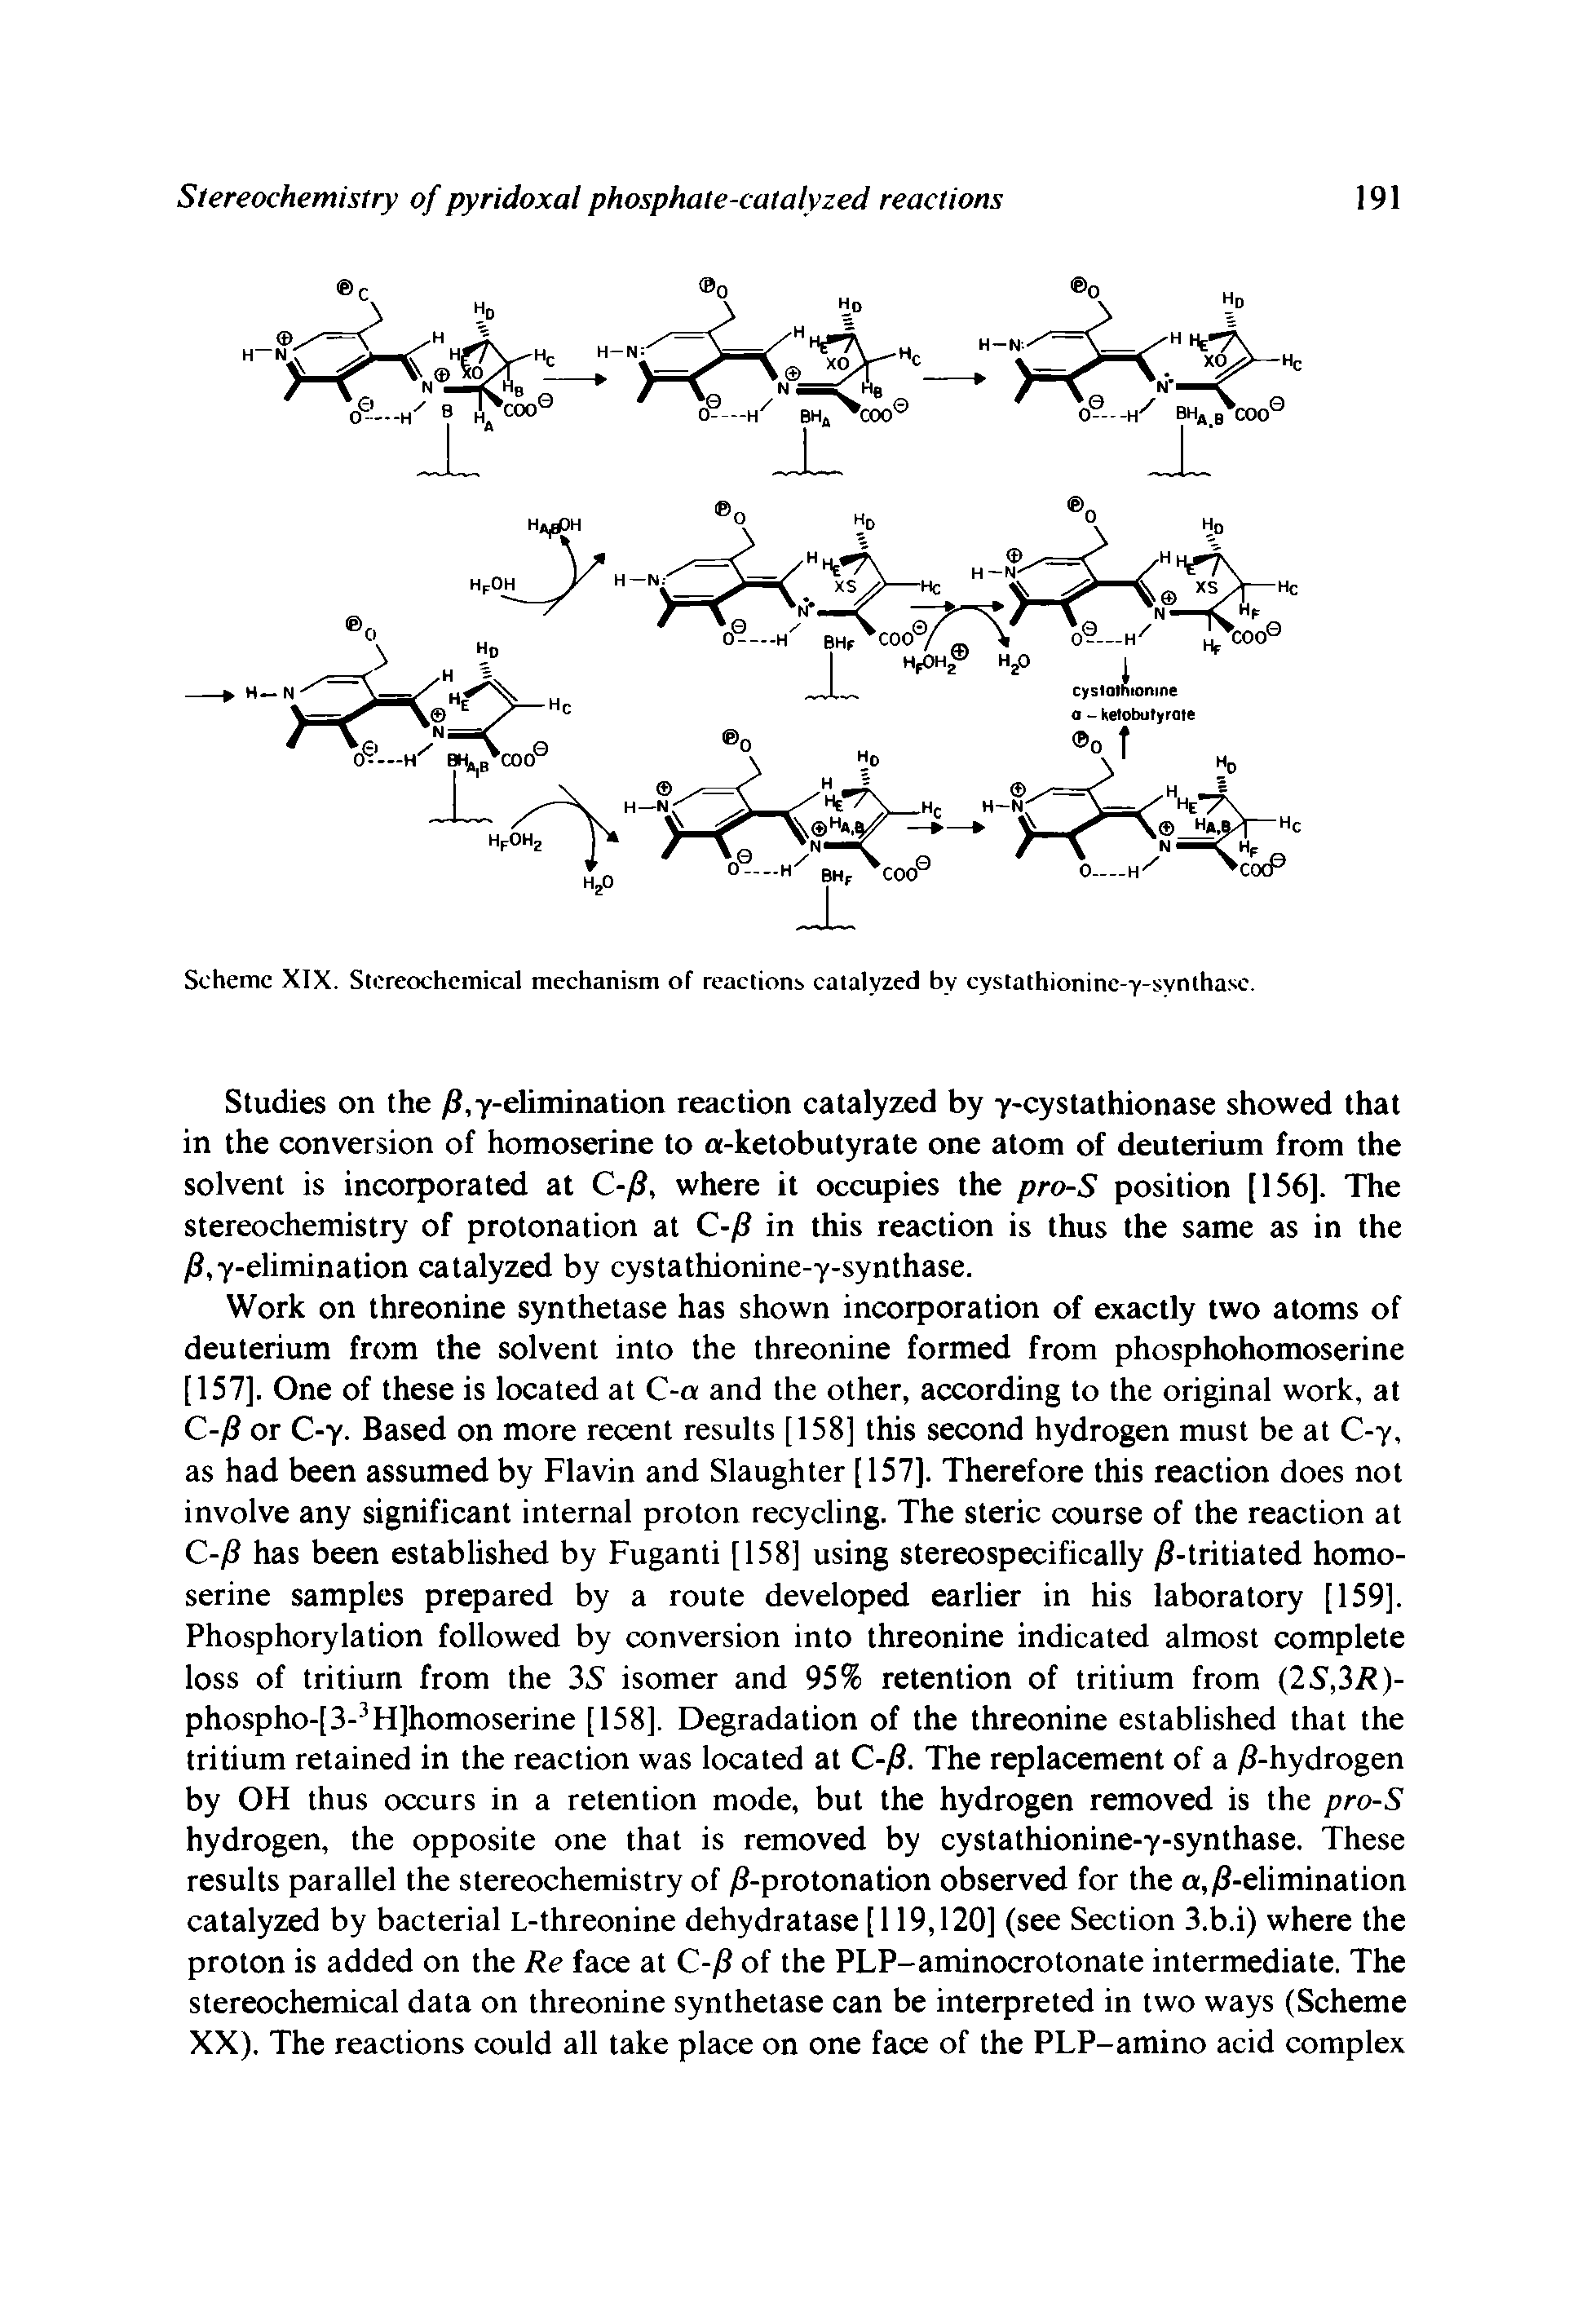 Scheme XIX. Stereochemical mechanism of reactions catalyzed by cystathioninc-y-synthasc.